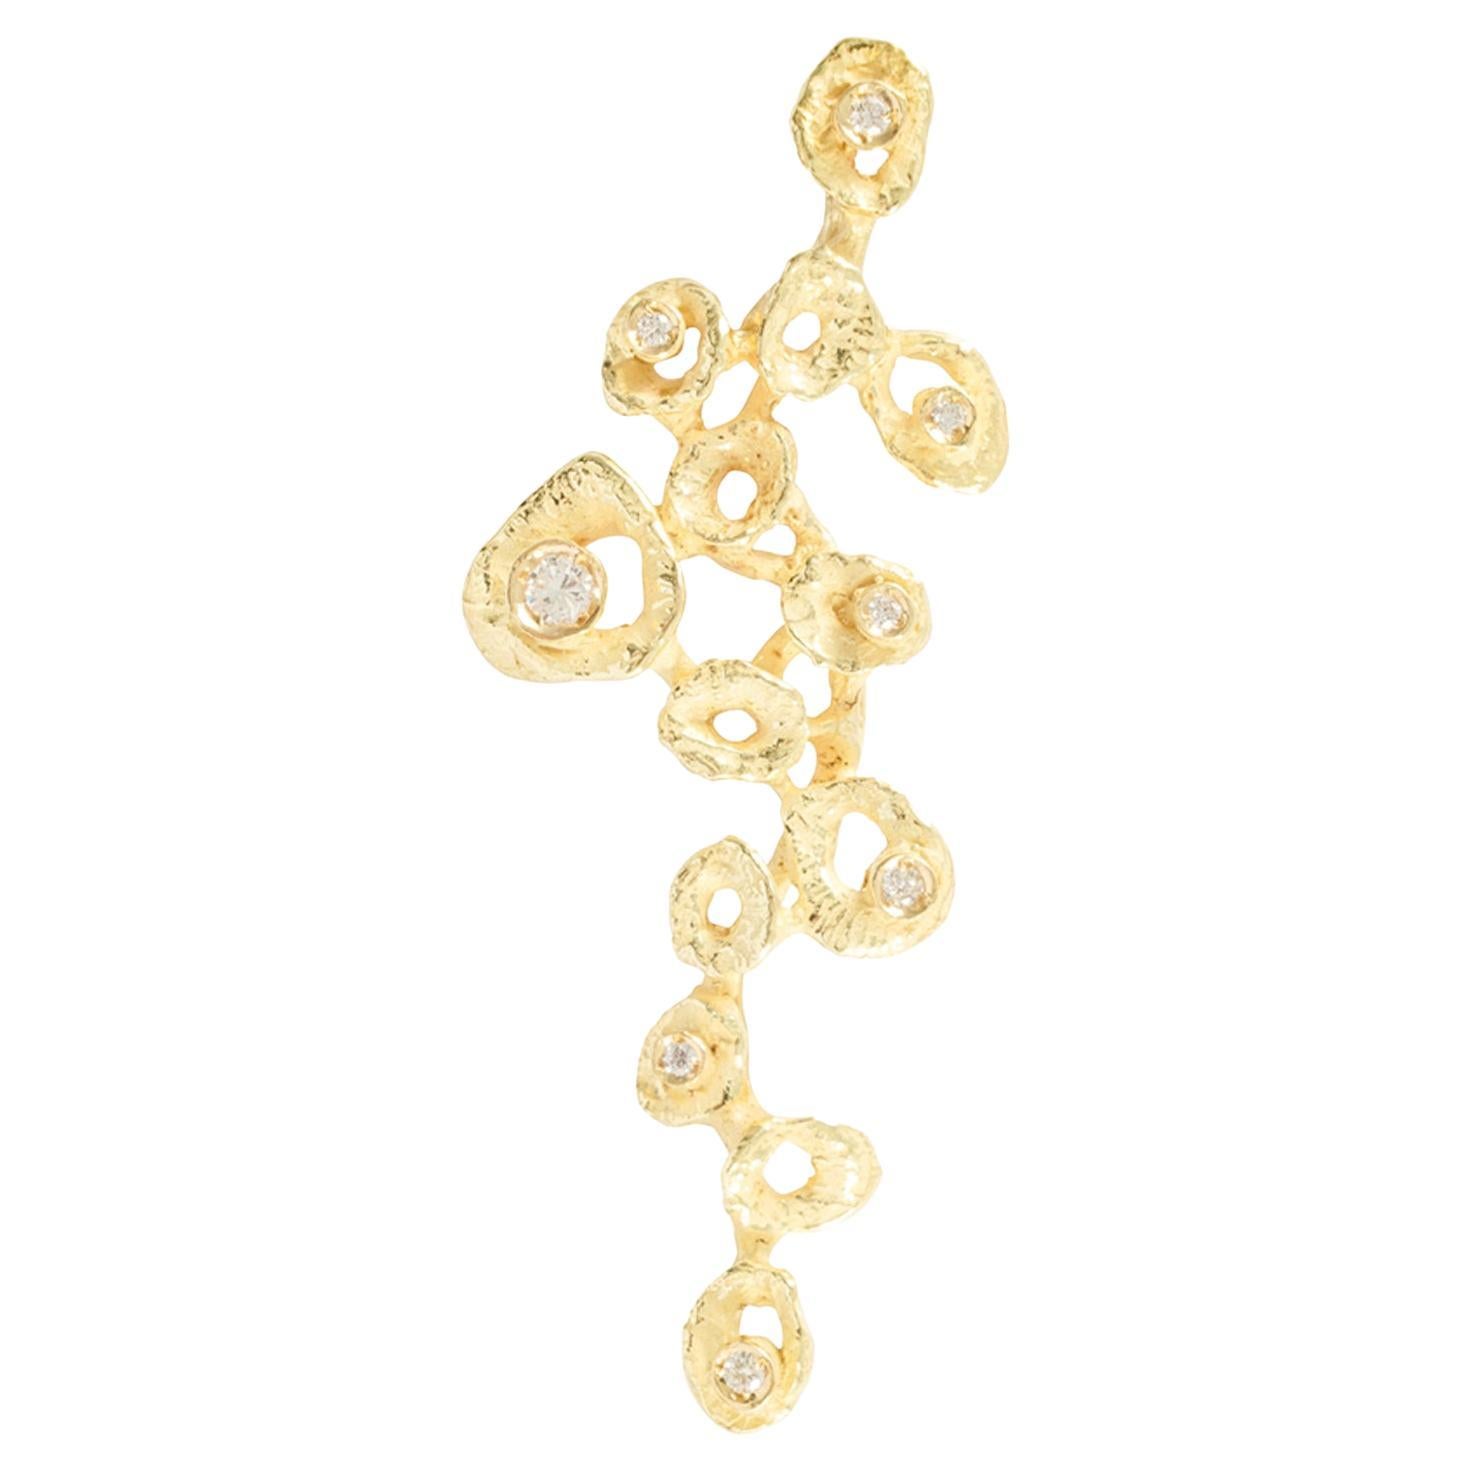 Sacchi "Bouquet" White Diamonds 18 Karat Yellow Gold Pendant Necklace For Sale